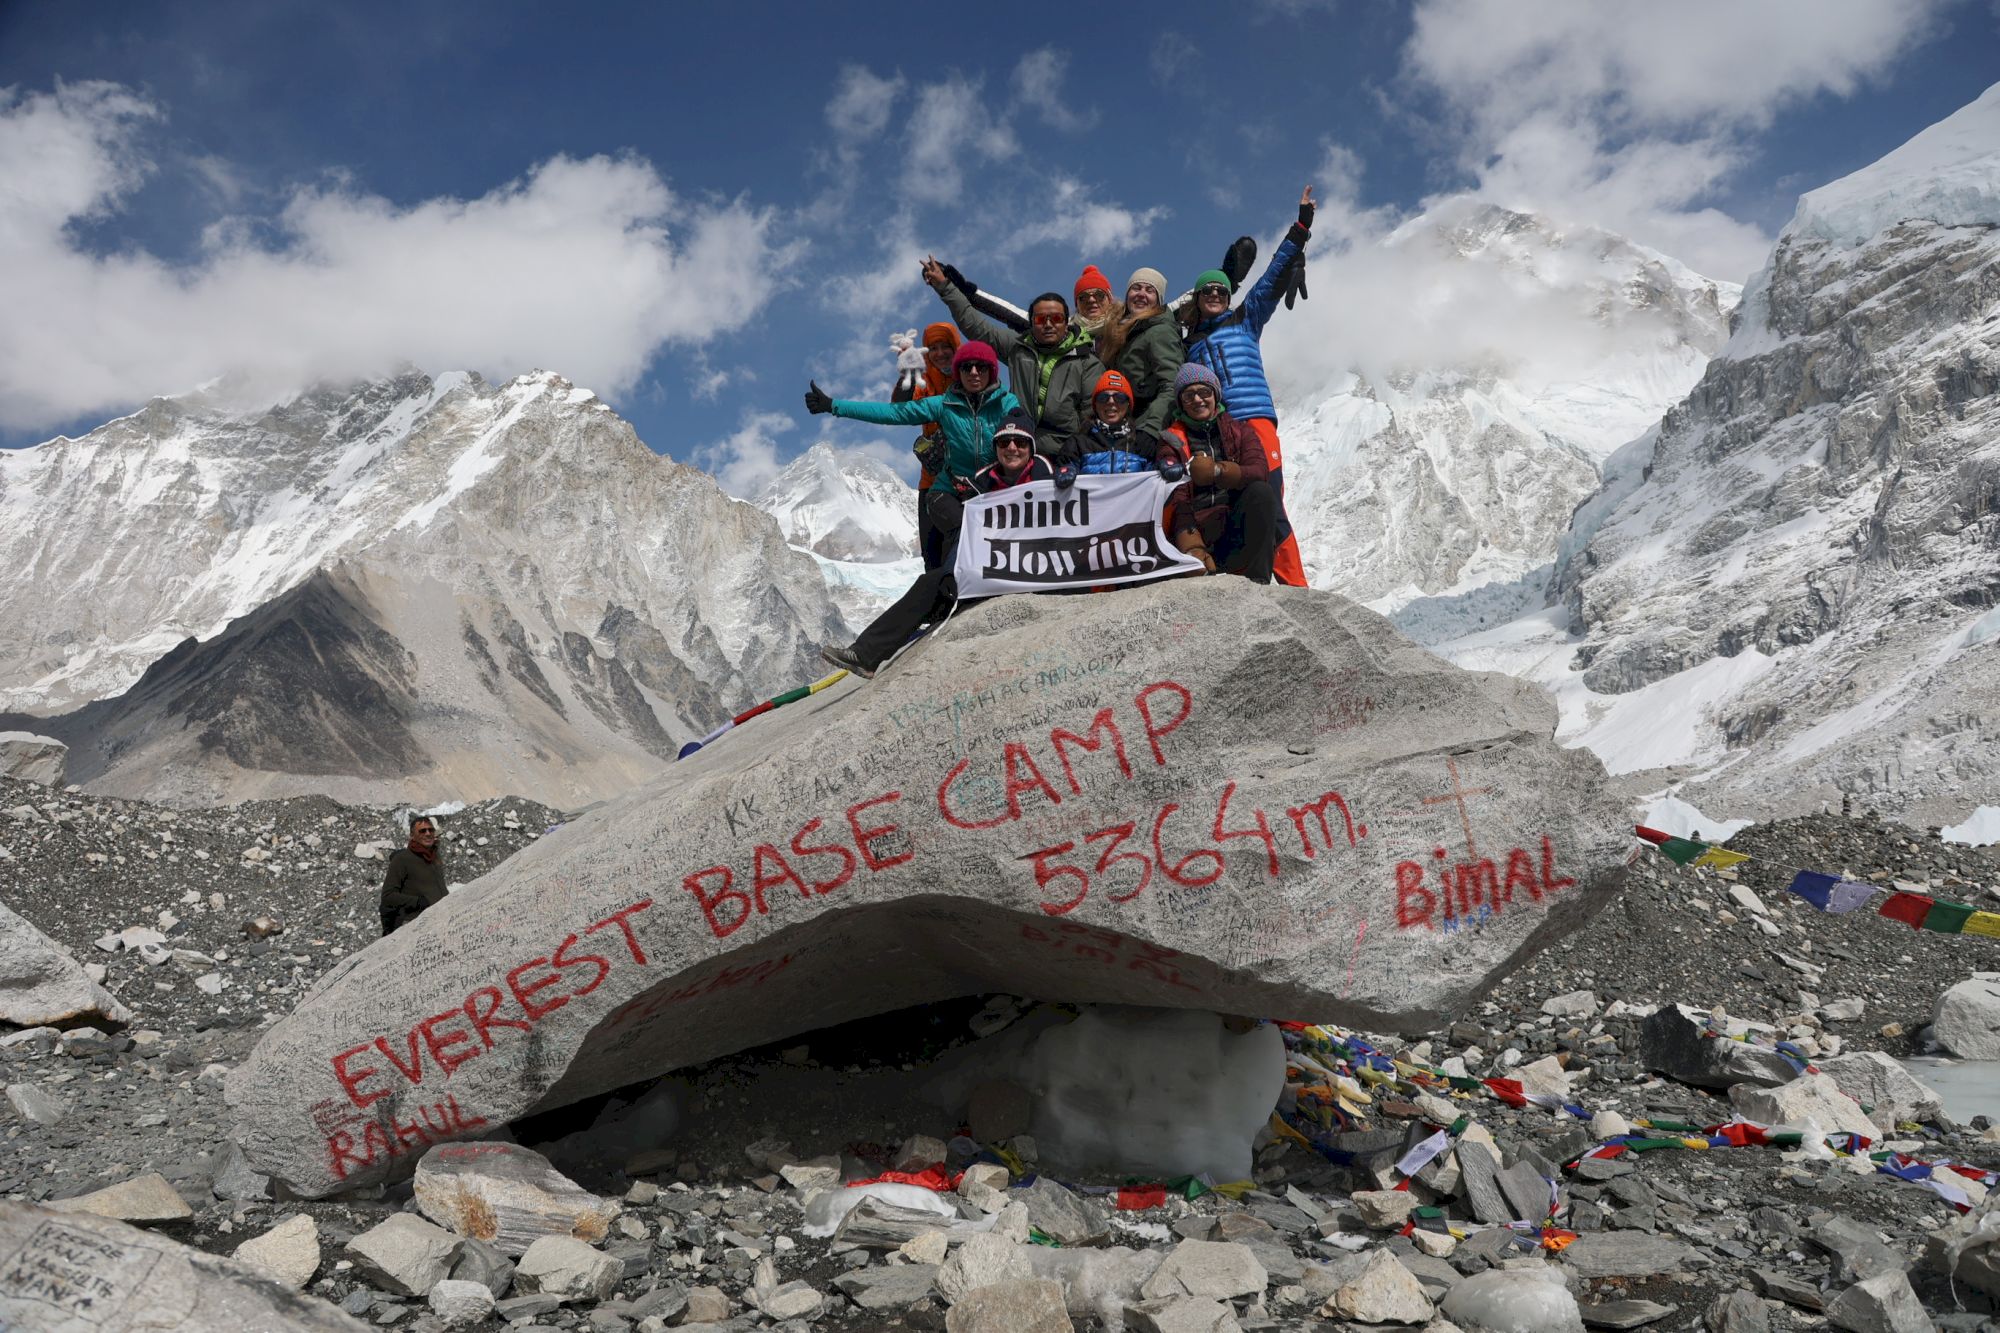 Trekking w Himalajach